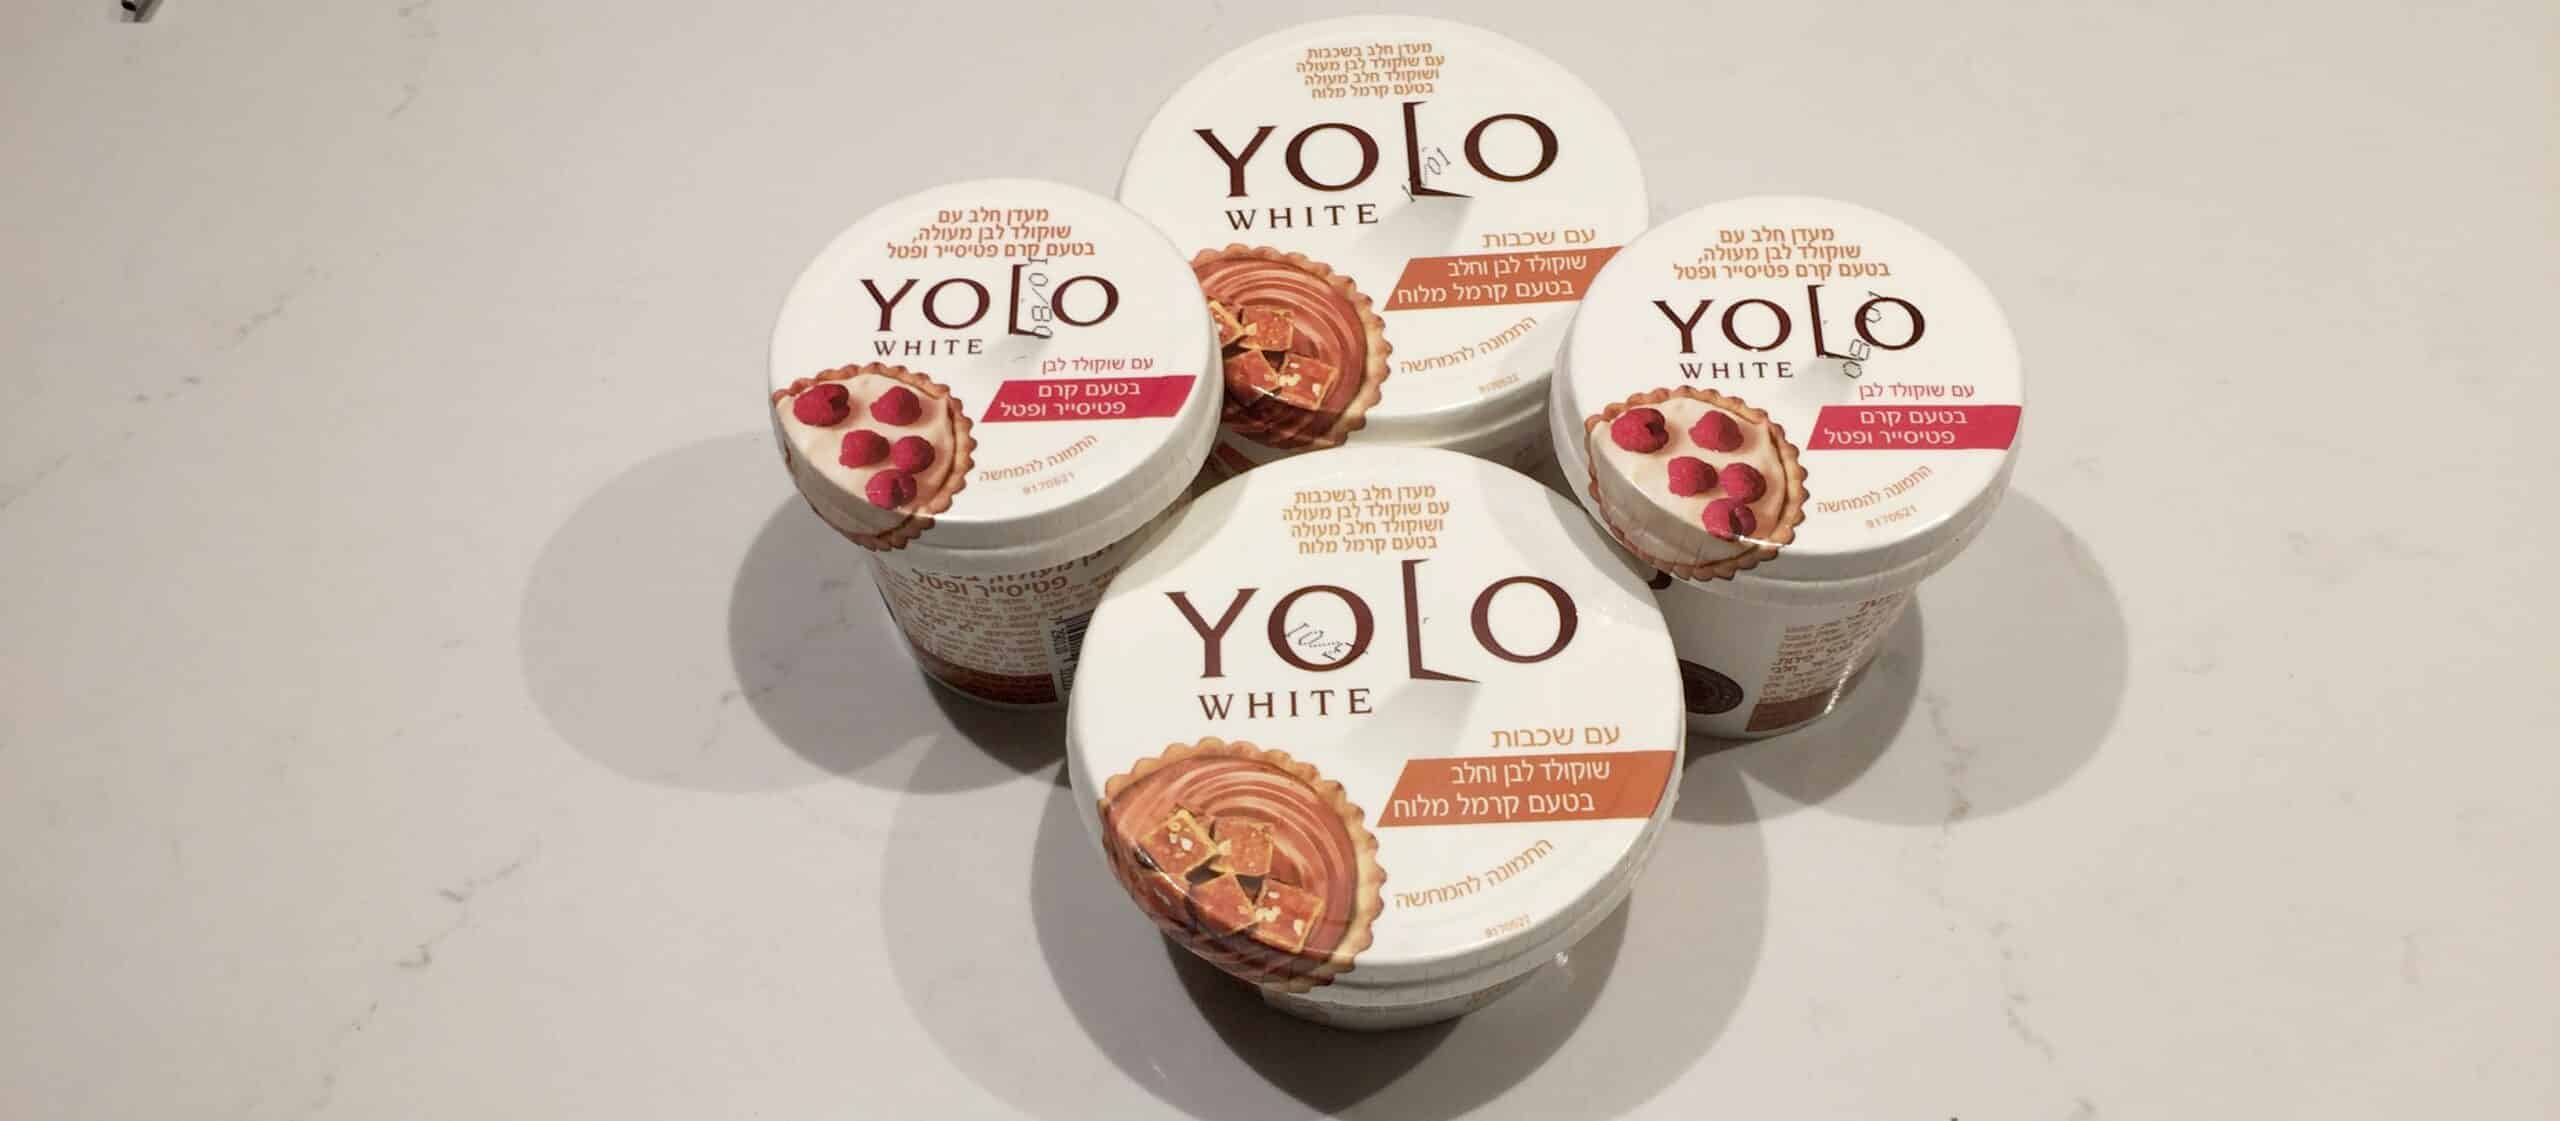 YOLO WHITE הוא צעד נוסף לחשוף את הצרכן הישראלי לשוקולד על כל גווניו, טעמיו וצבעיו